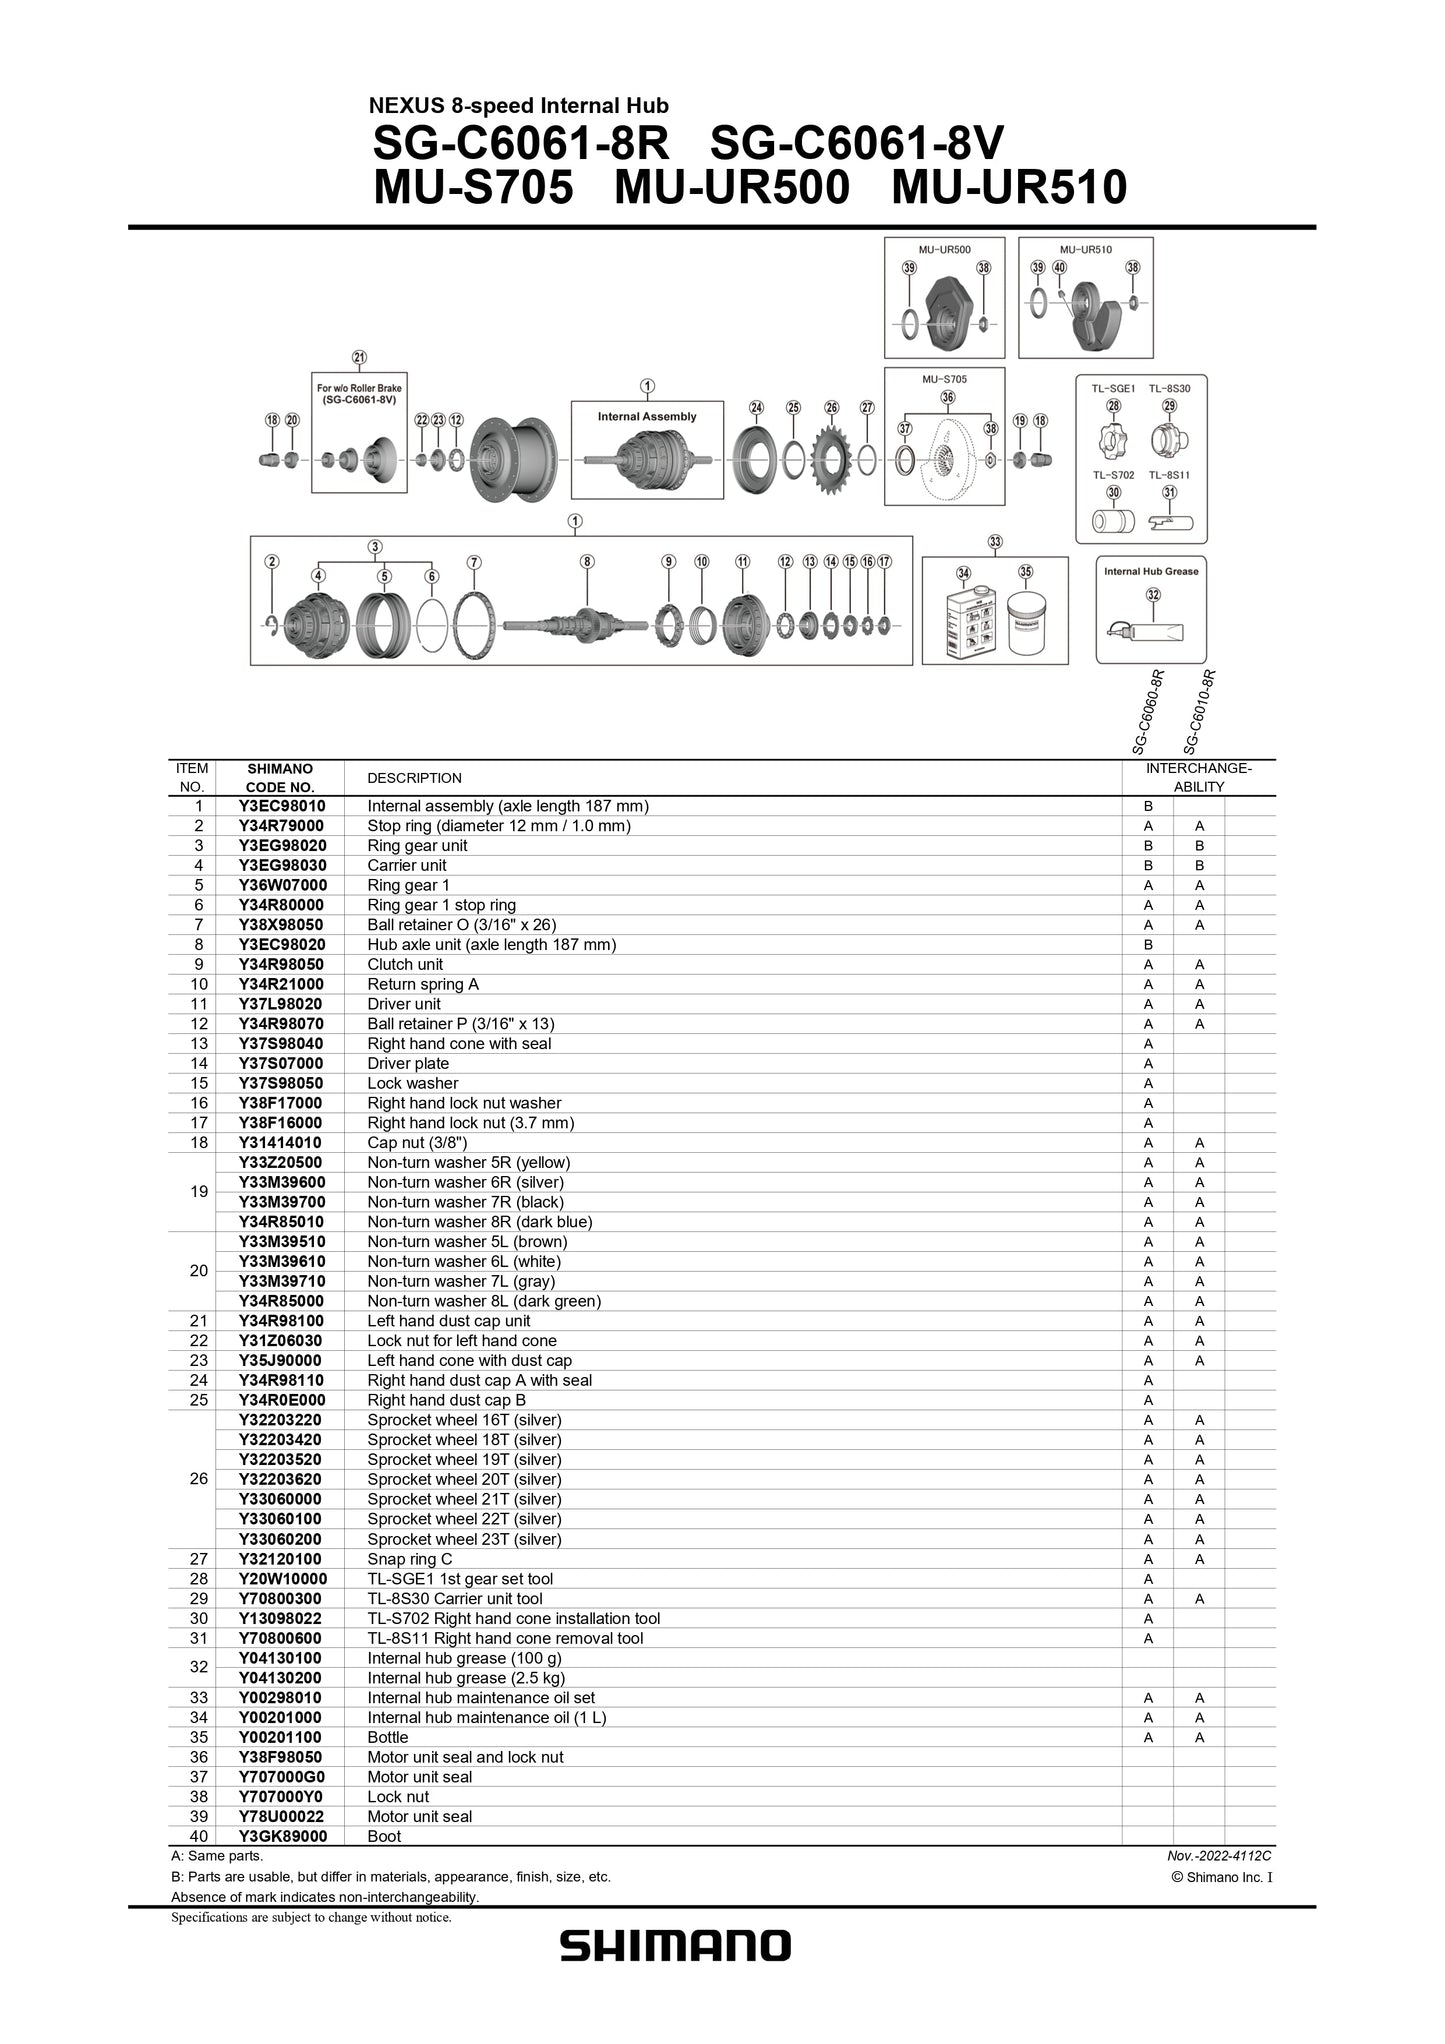 SHIMANO Nexus MU-S705 Motor Unit Seal and Lock Nut - Y38F98050-Pit Crew Cycles